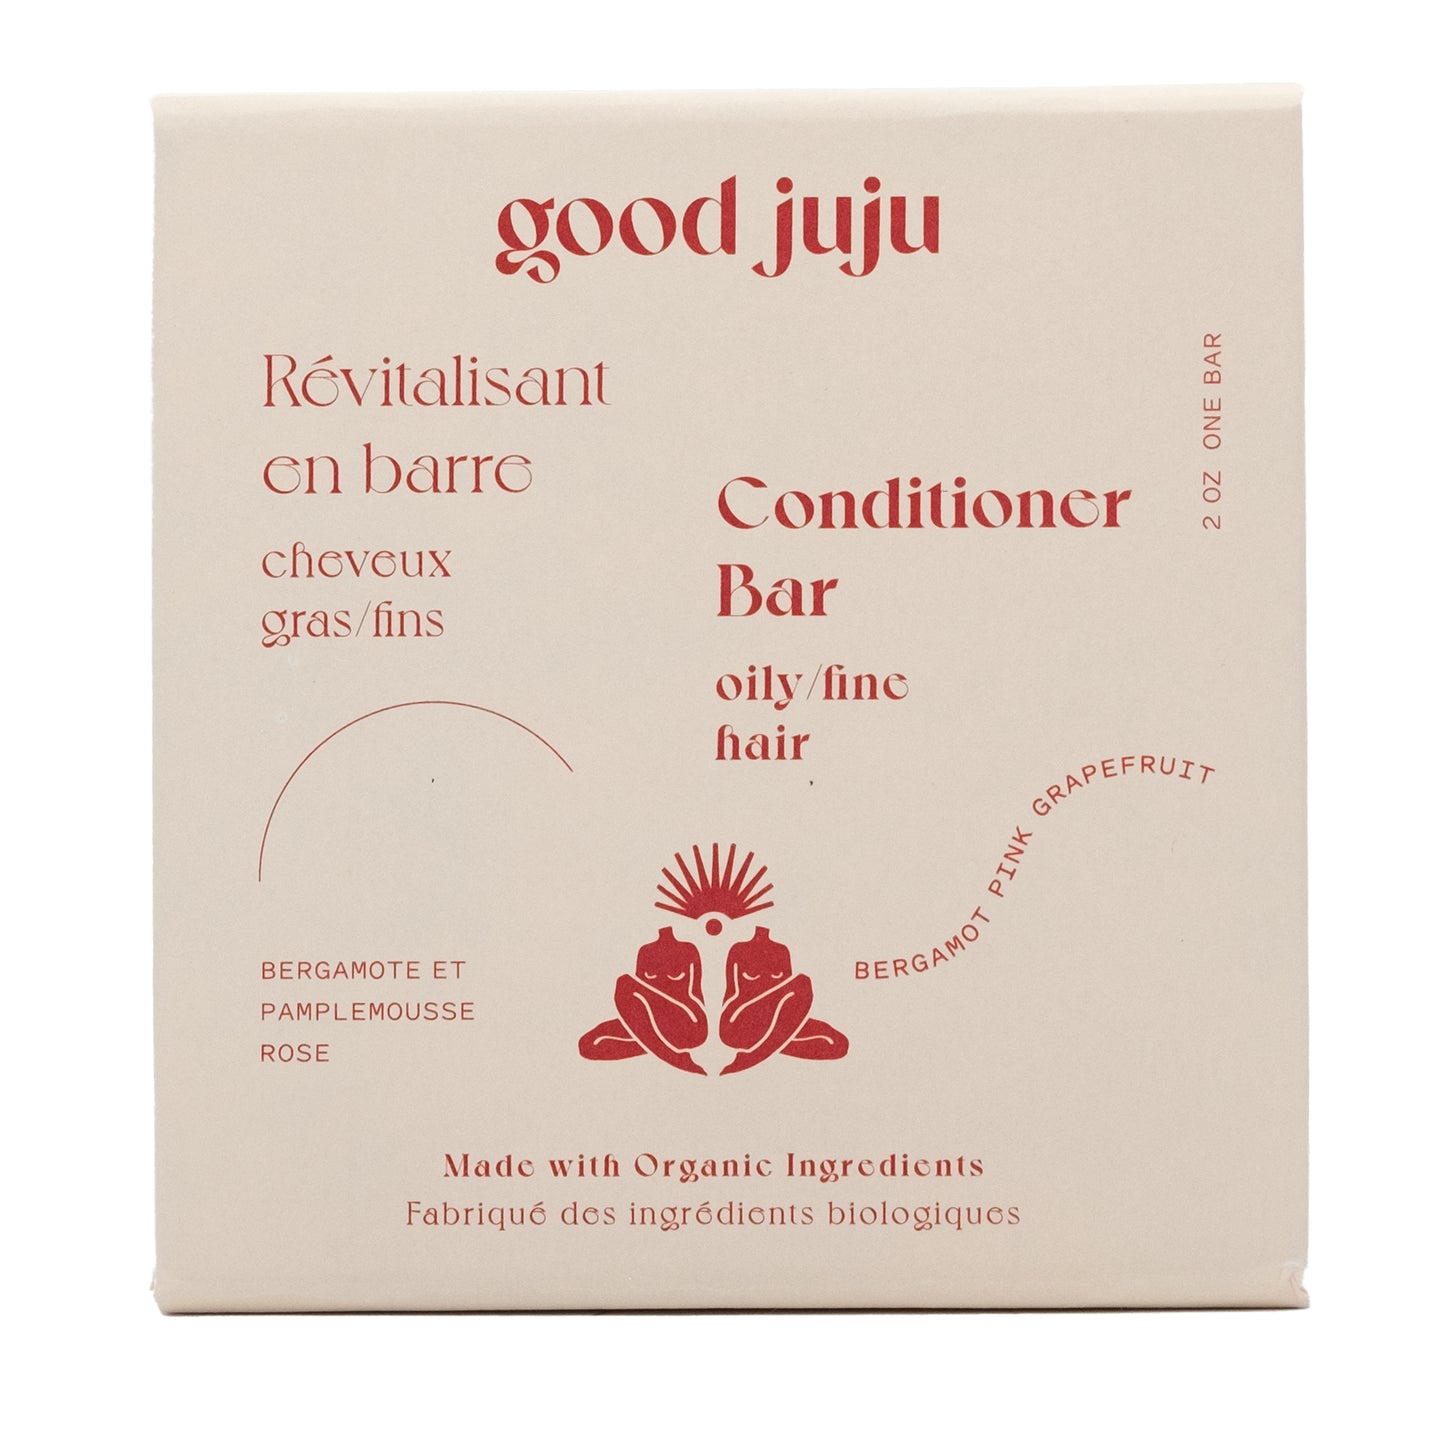 Oil/ Fine Hair Conditioner Bar